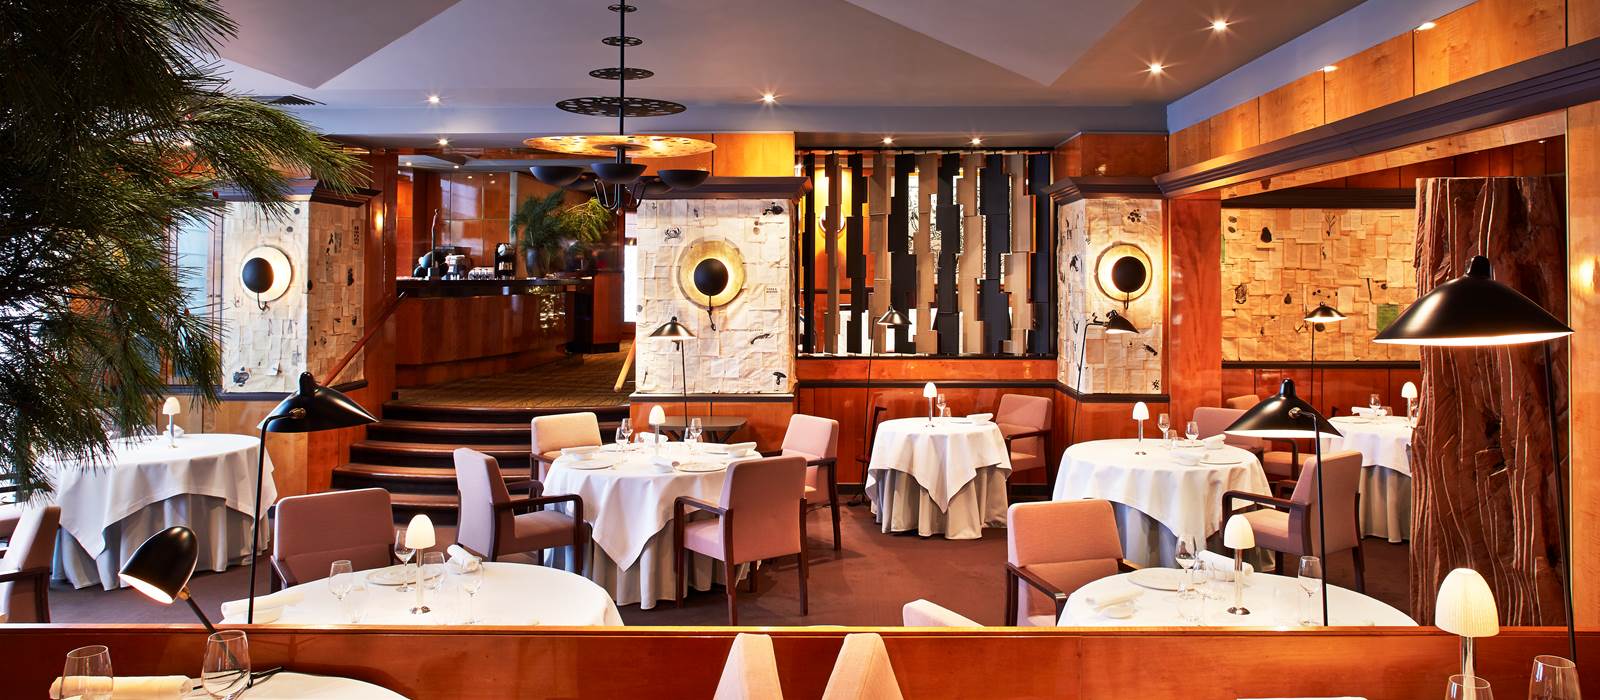 3 Michelin star Restaurant Hotel Balzac Paris